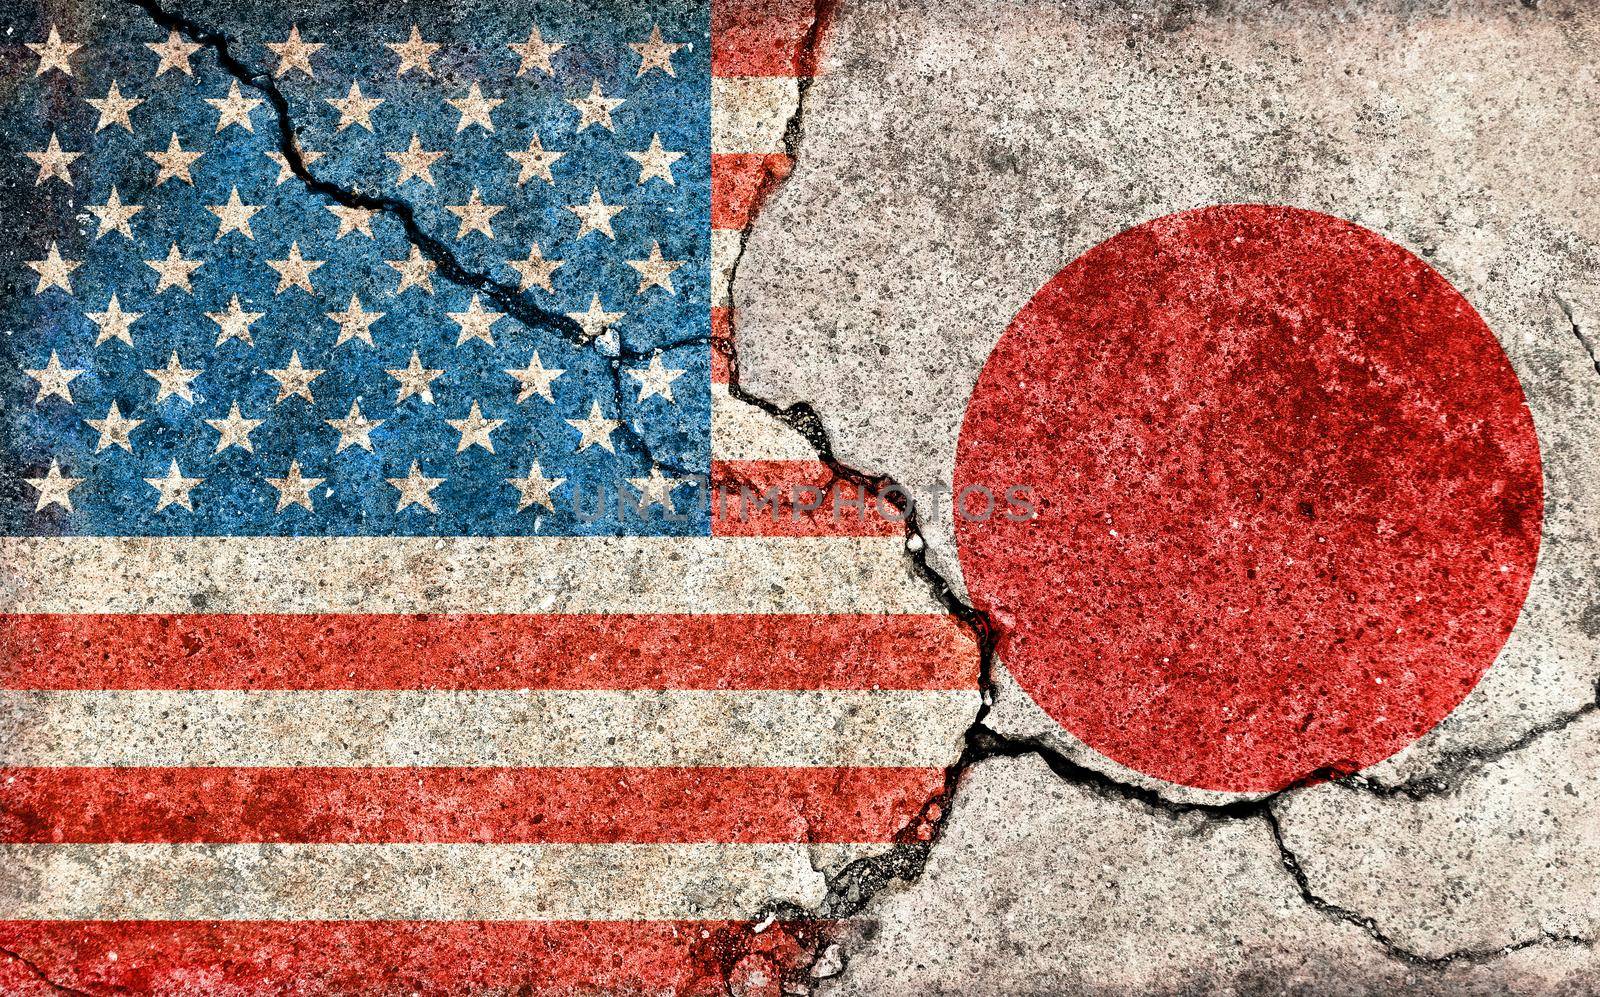 Grunge country flag illustration (cracked concrete background) / USA vs Japan (Political or economic conflict)